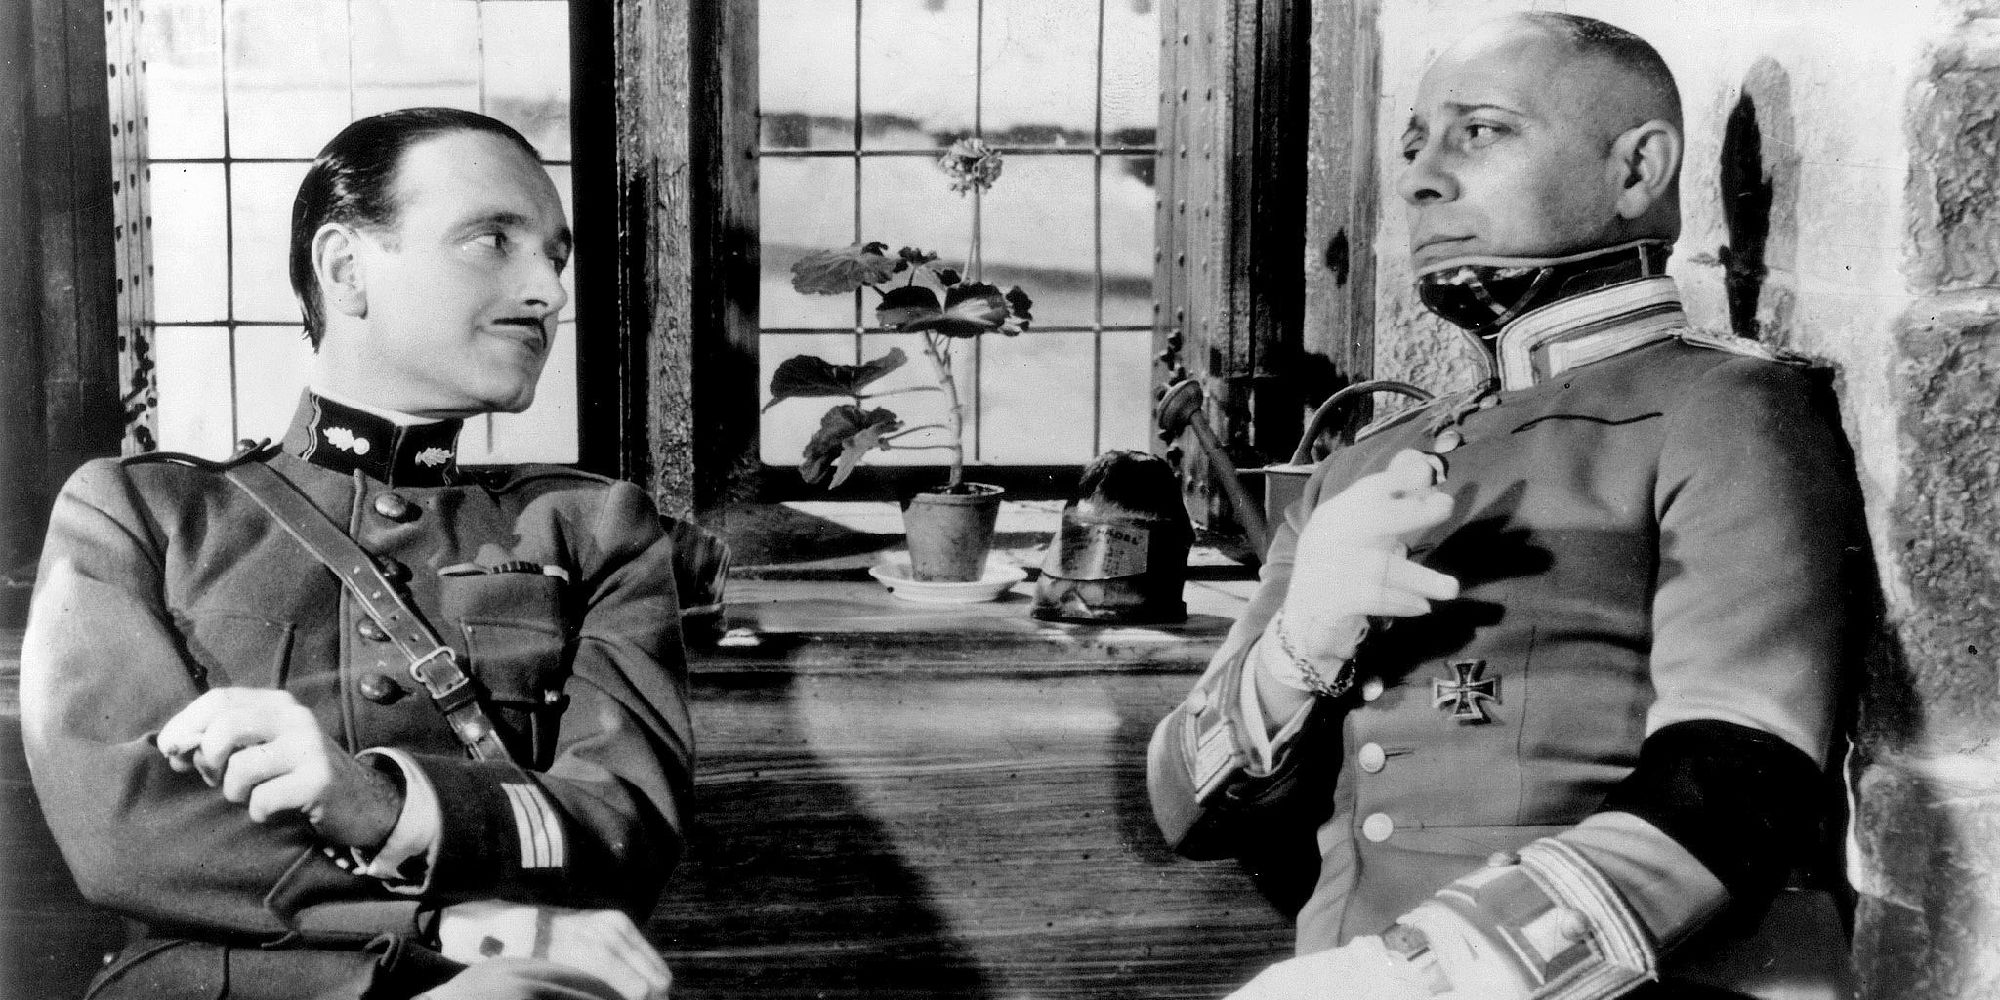 Erich von Stroheim and Pierre Fresnay in The Grand Illusion